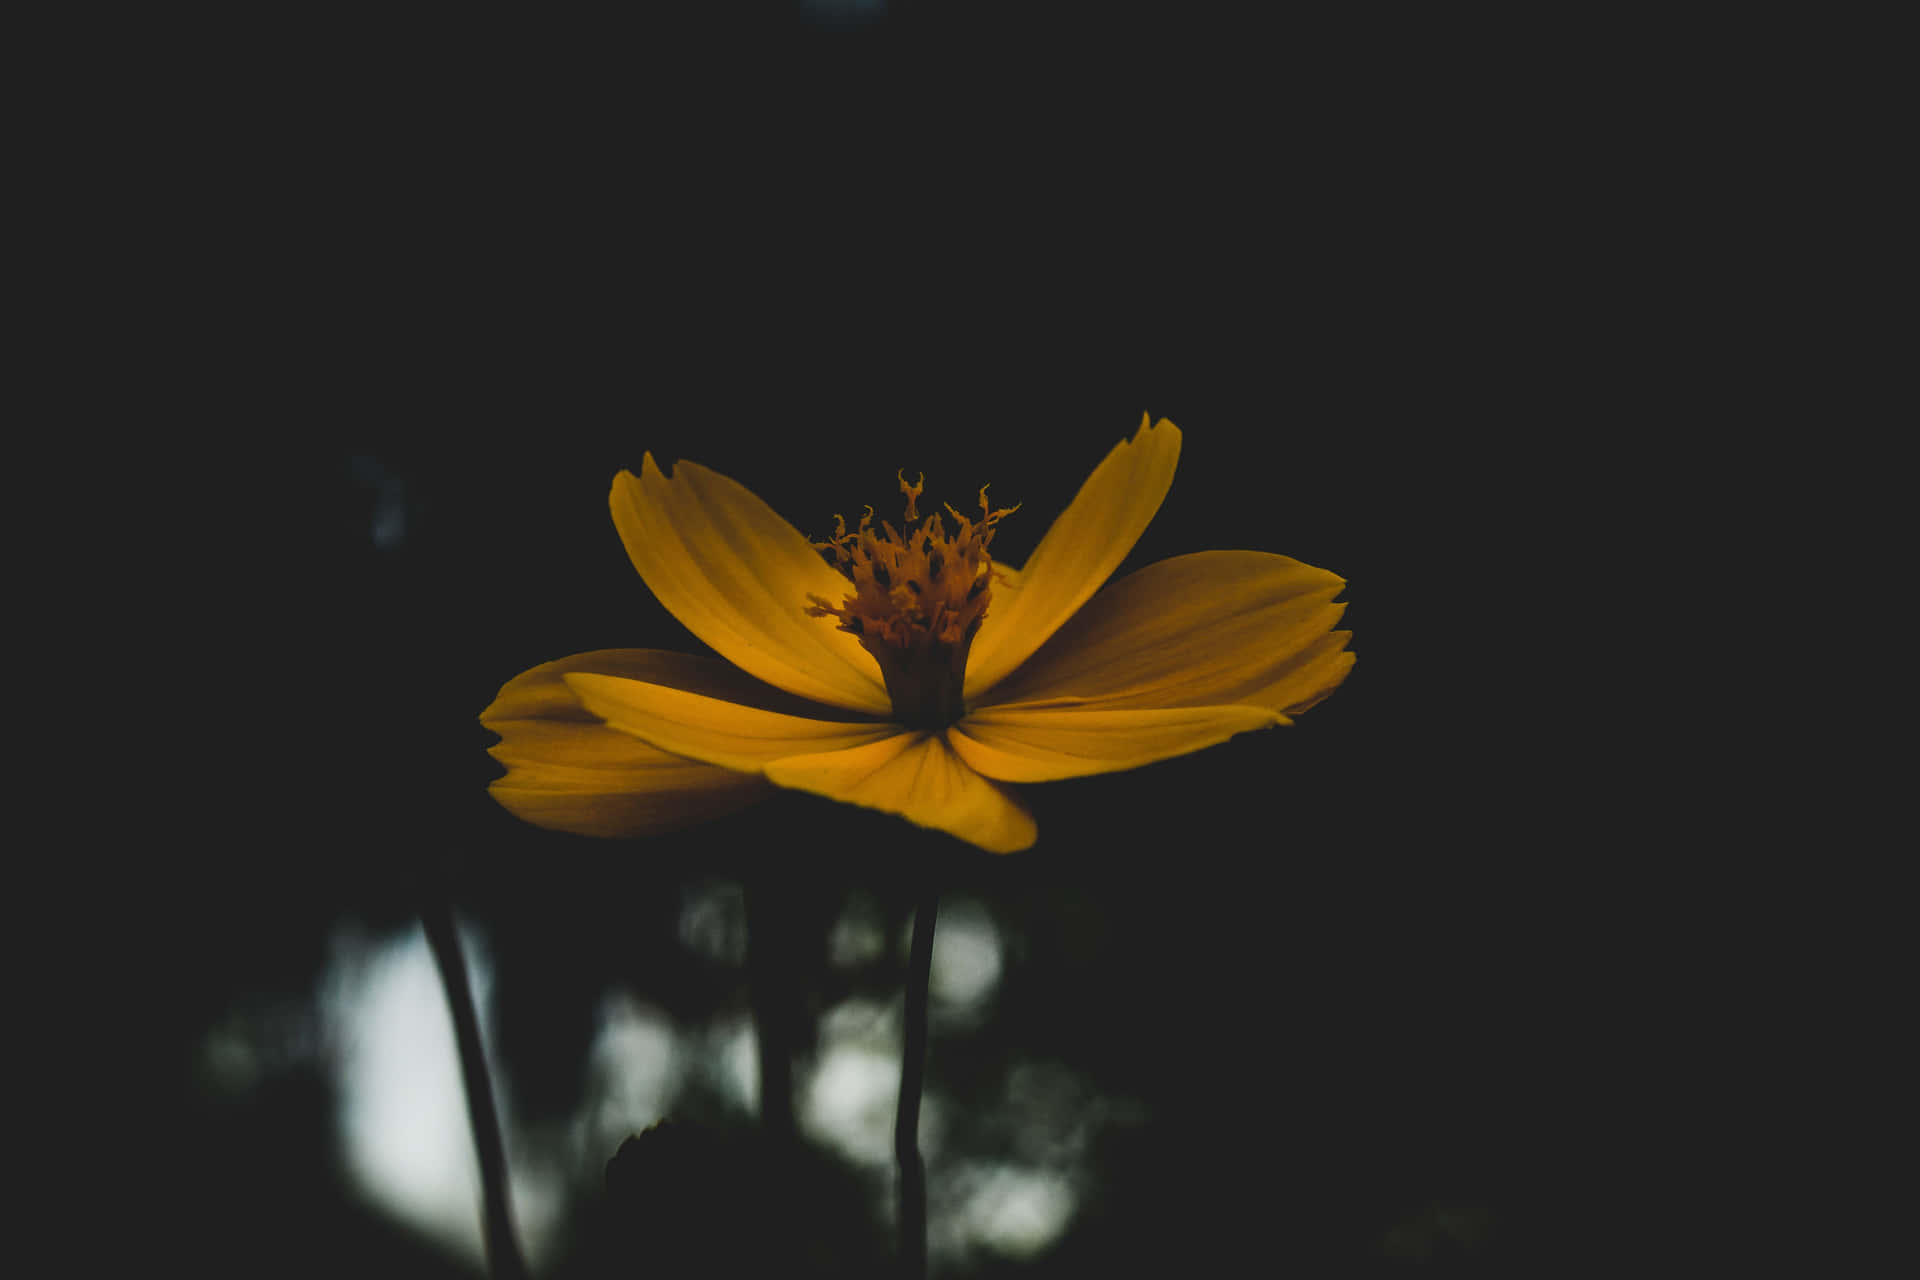 A Yellow Flower In The Dark Background